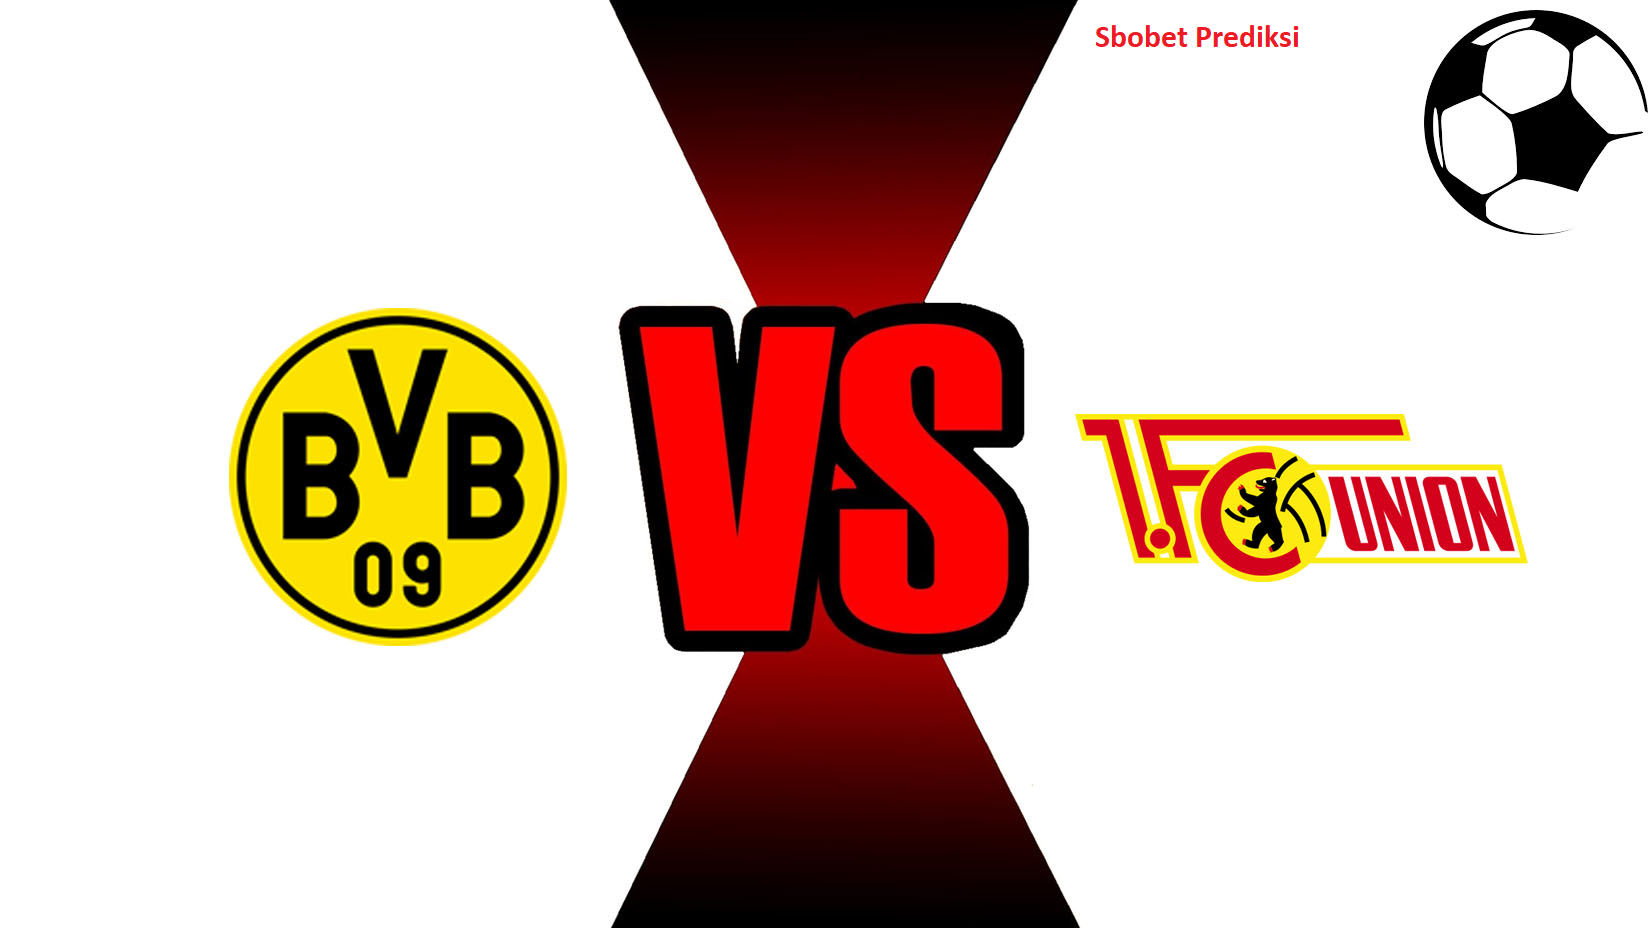 Prediksi Skor Bola Online Borussia Dortmund Vs Union Berlin 1 November 2018